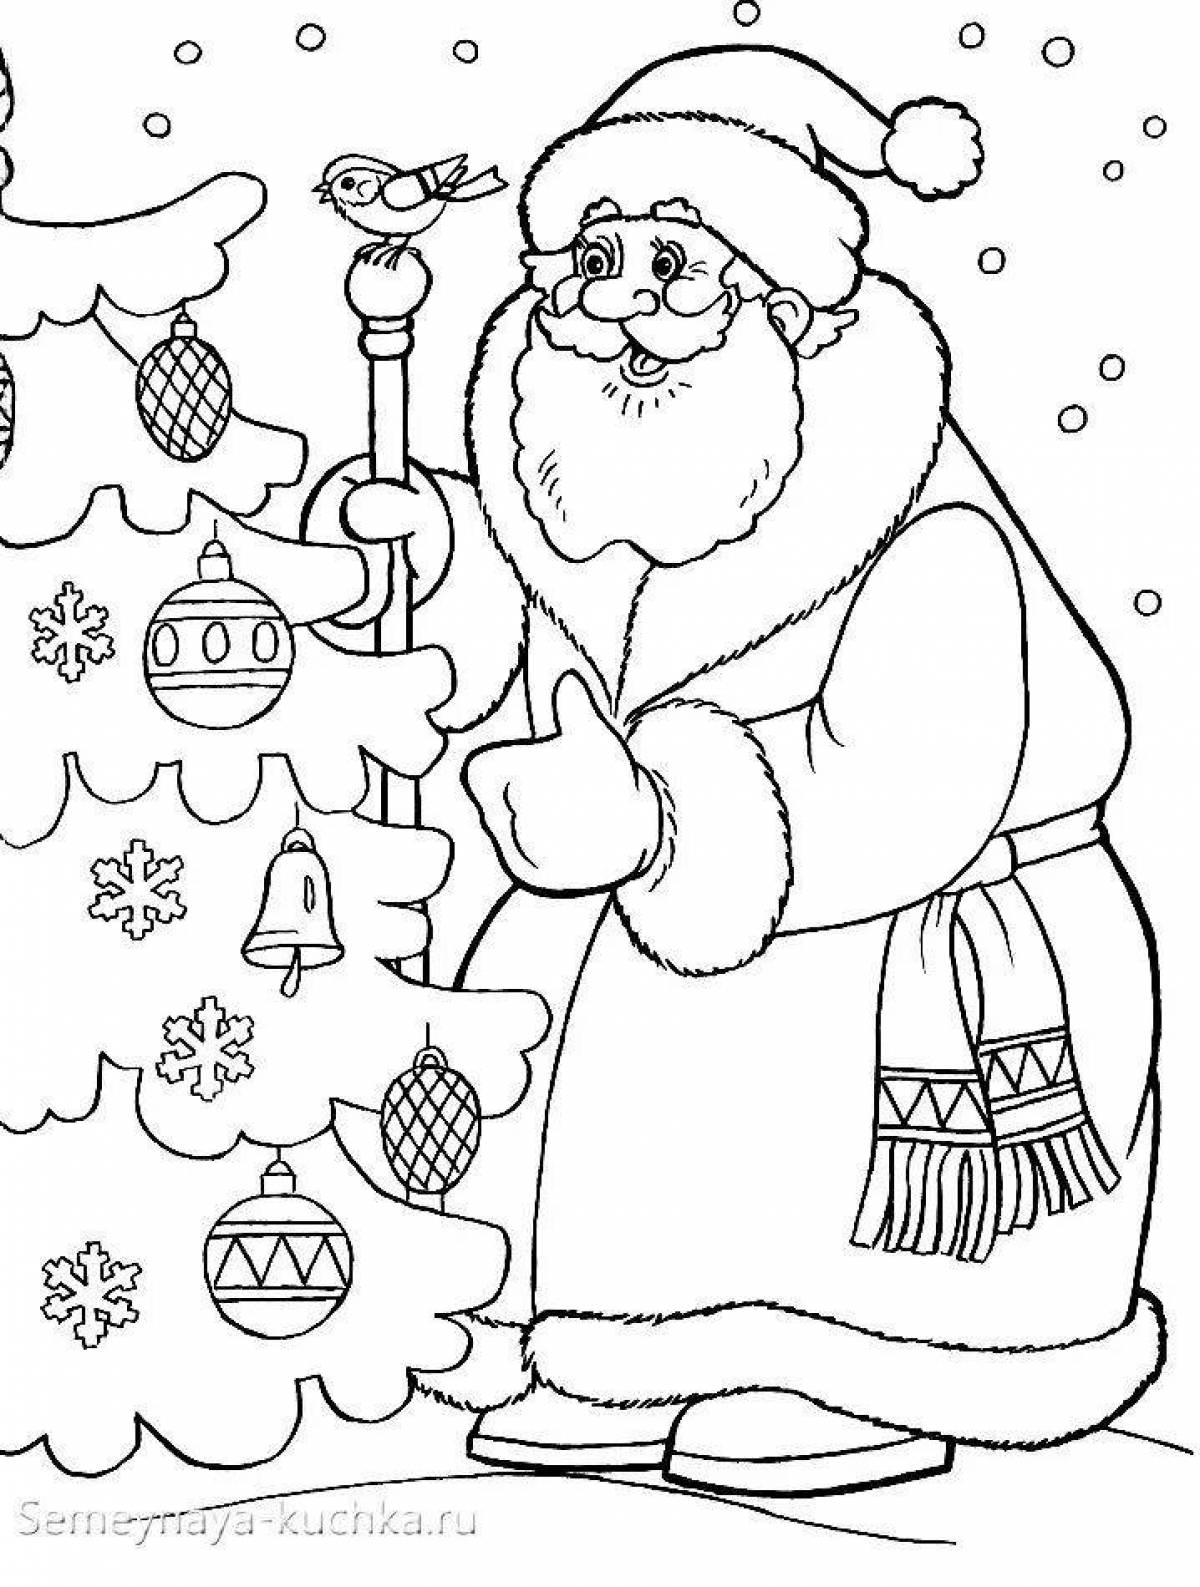 Animated santa claus coloring page